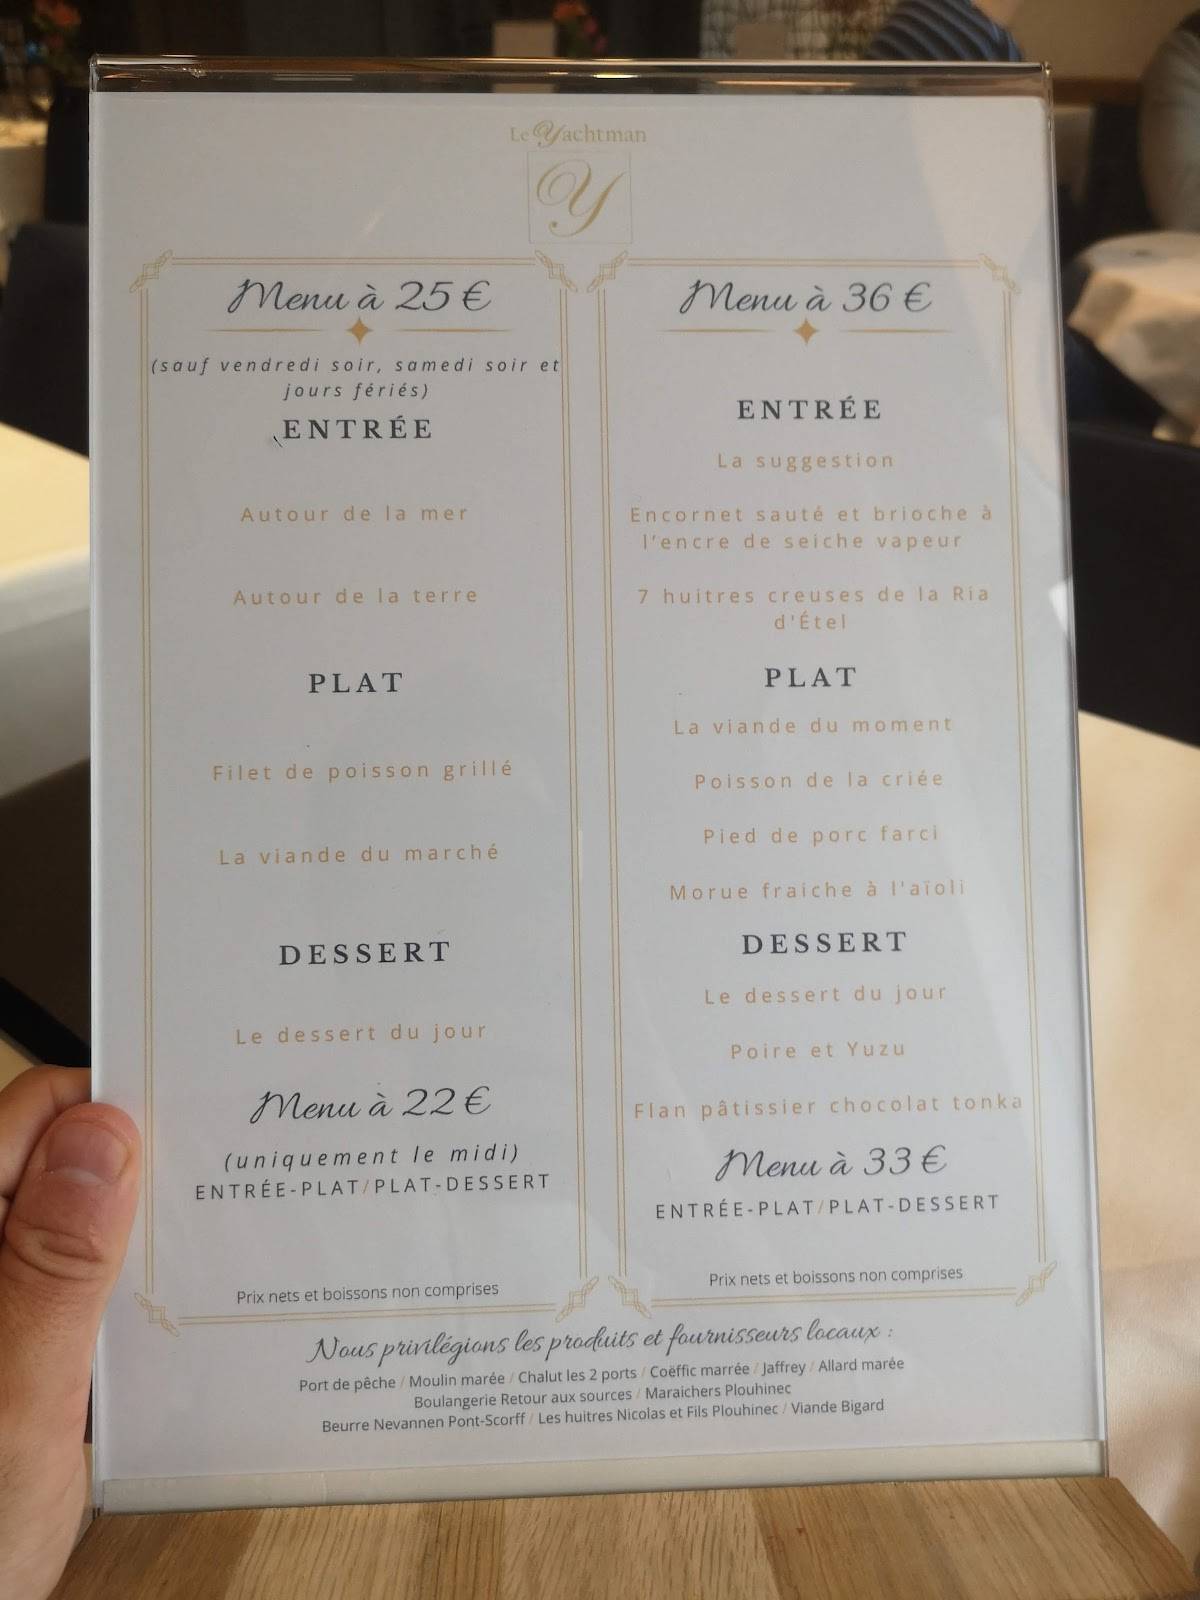 yachtman lorient menu